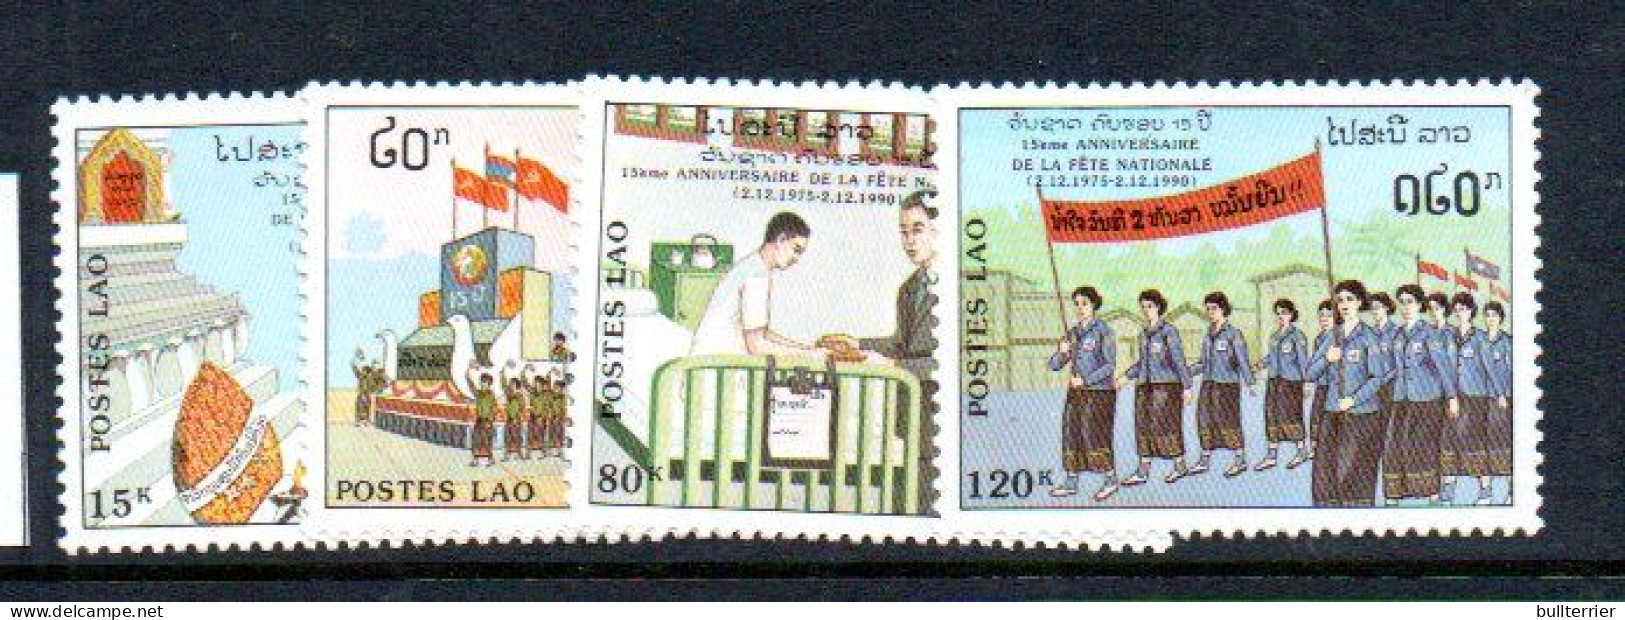 LAOS - 1990 - NATIONAL CUSTOMS SET OF 4   MINT NEVER HINGED - Laos